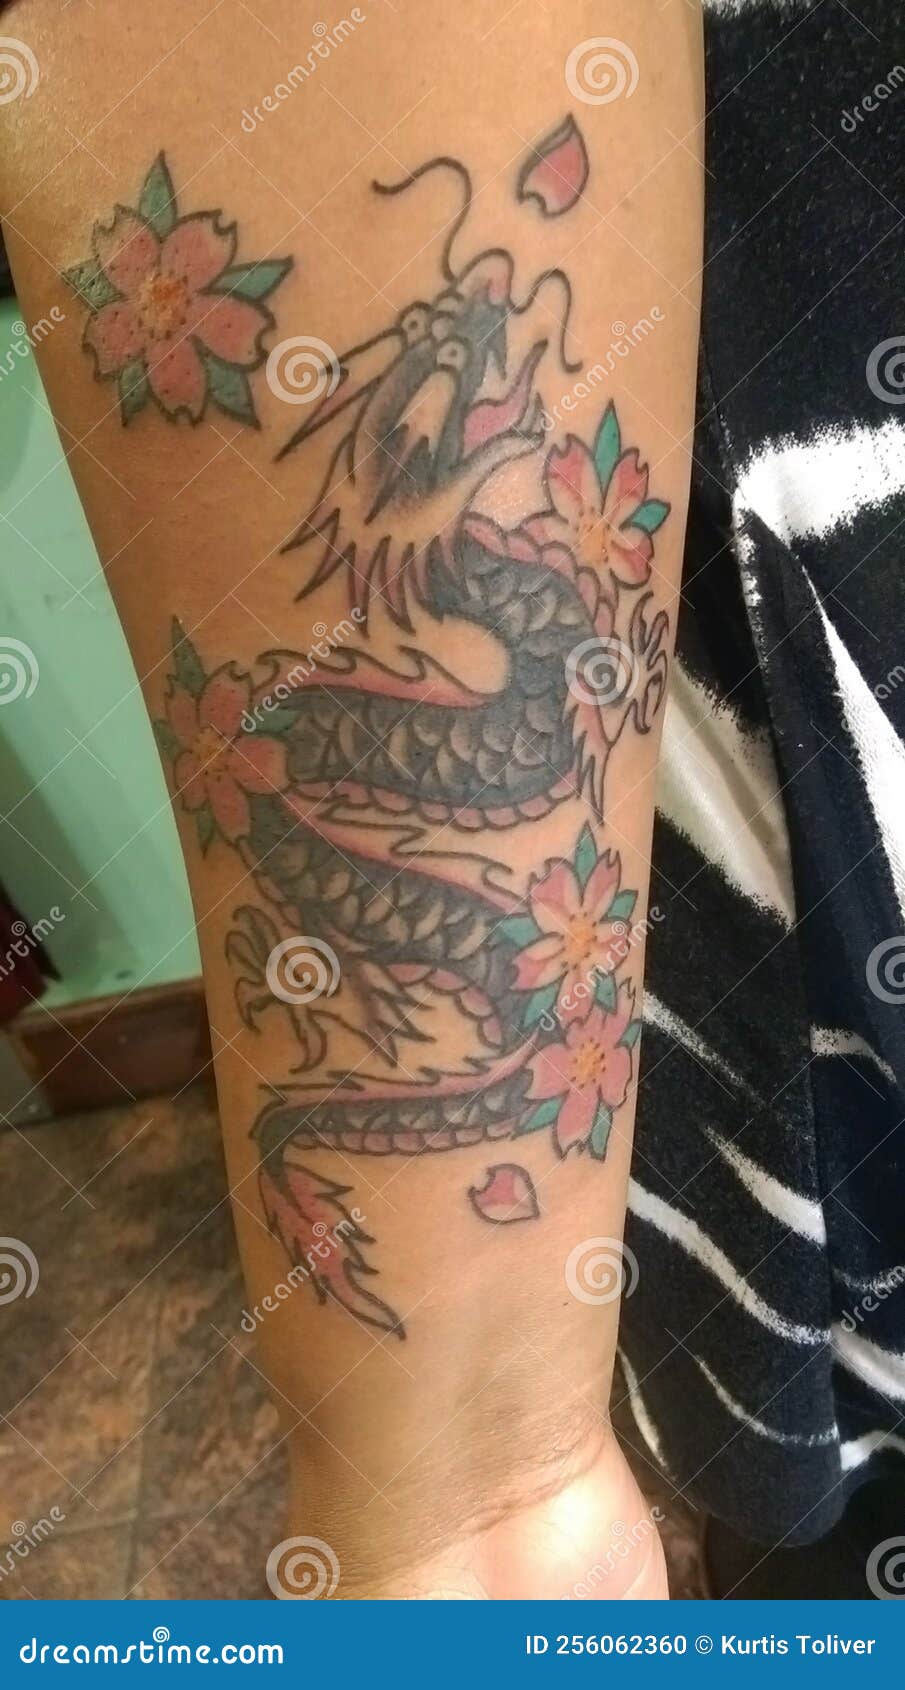 Forearm sleeve tattoo of a dragon fighti...